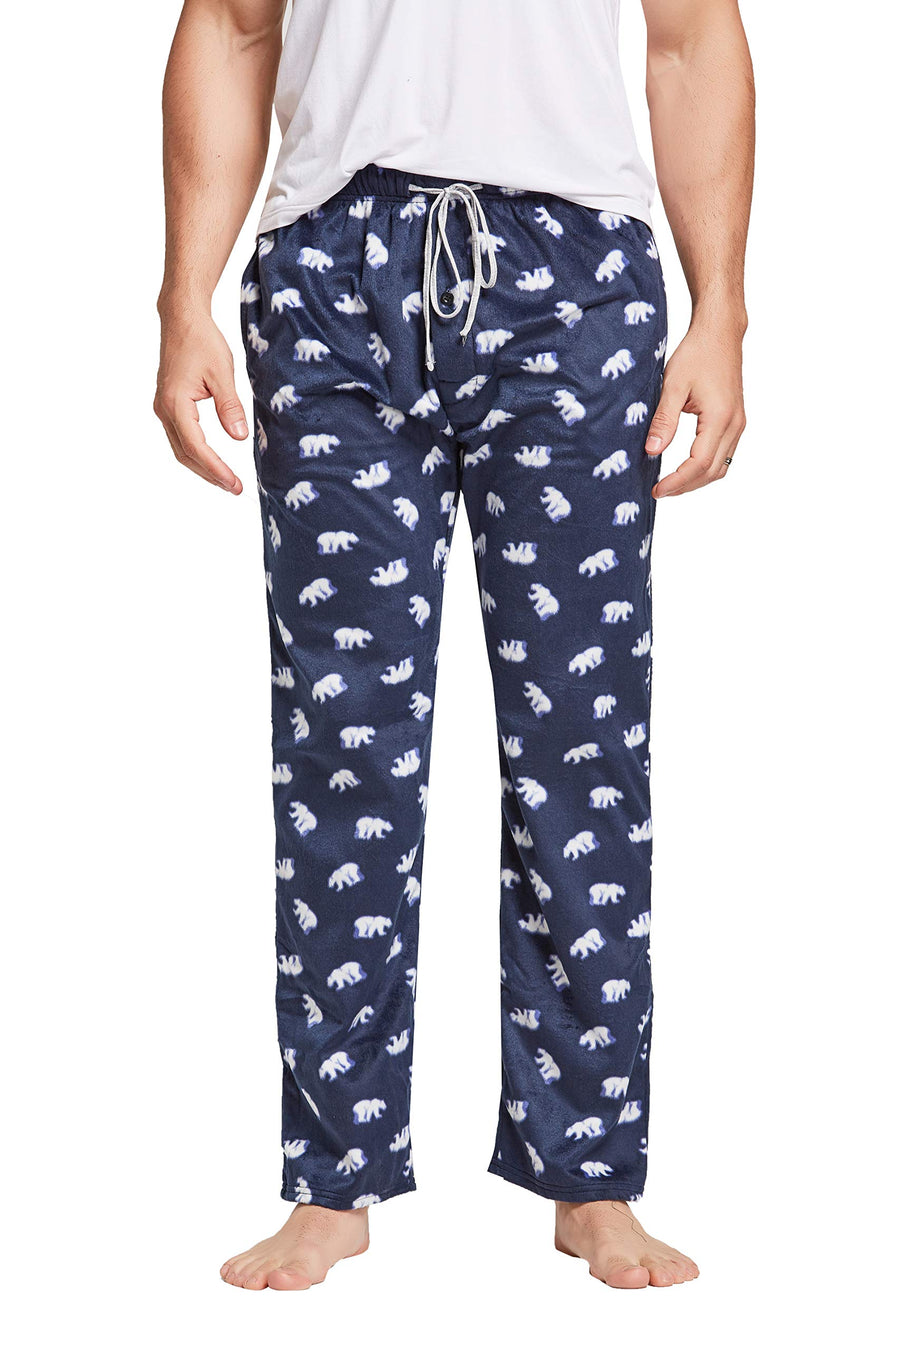 CYZ Men's 100% Cotton Poplin Pajama Lounge Sleep Pant, Violet